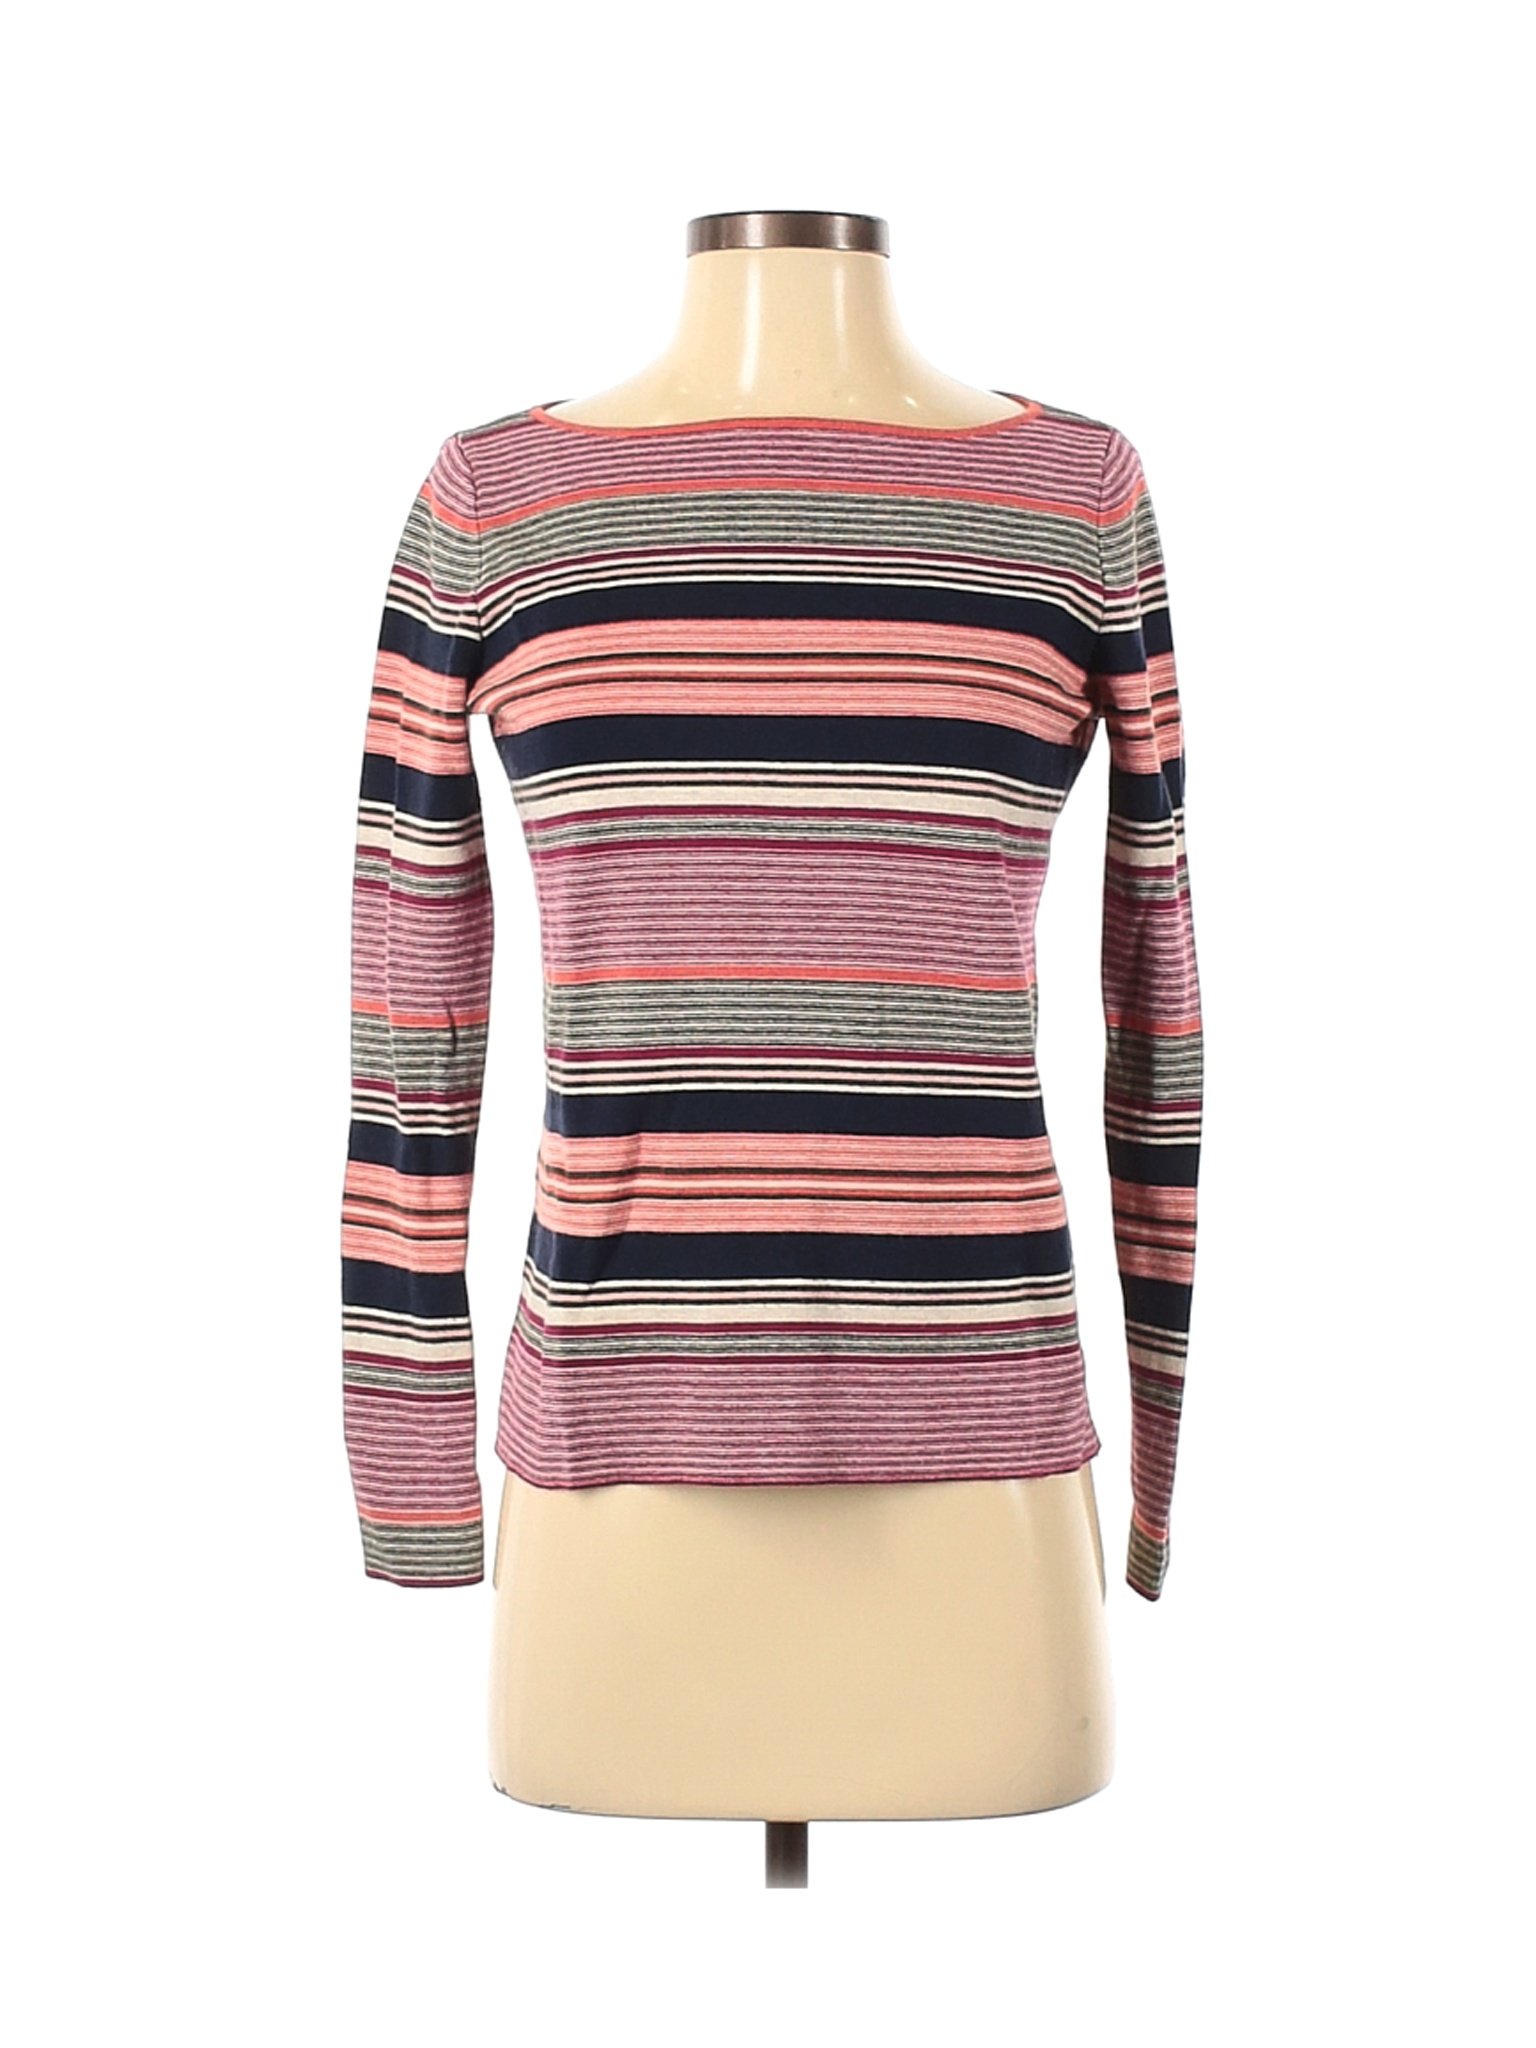 Gap Women Pink Pullover Sweater S | eBay